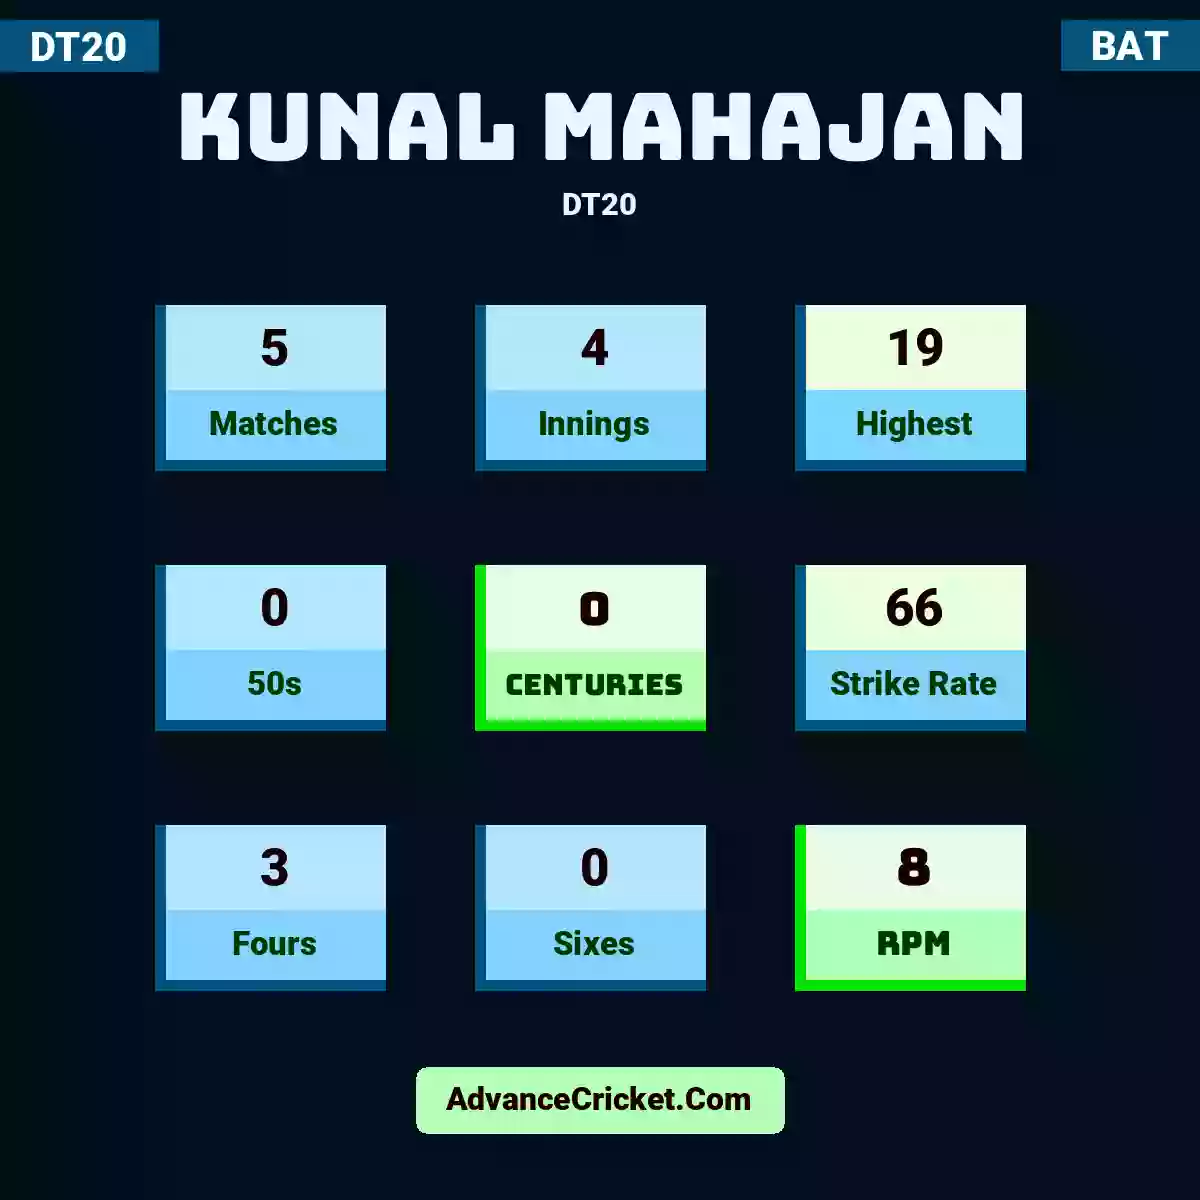 Kunal Mahajan DT20 , Kunal Mahajan played 5 matches, scored 19 runs as highest, 0 half-centuries, and 0 centuries, with a strike rate of 66. K.Mahajan hit 3 fours and 0 sixes, with an RPM of 8.